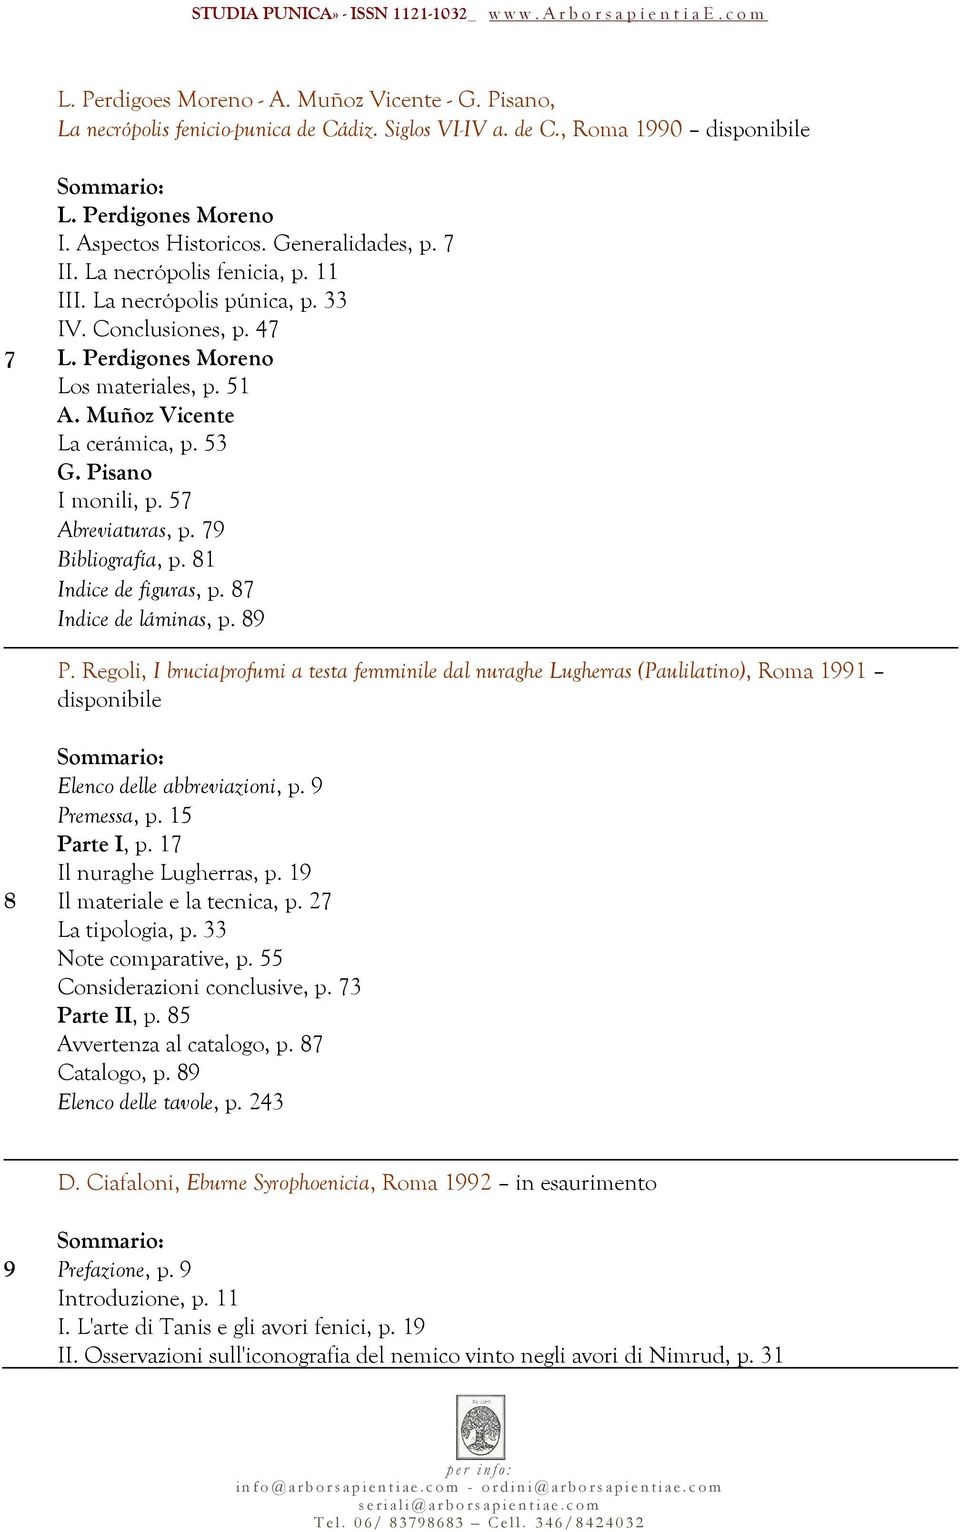 57 Abreviaturas, p. 79 Bibliografía, p. 81 Indice de figuras, p. 87 Indice de láminas, p. 89 P.